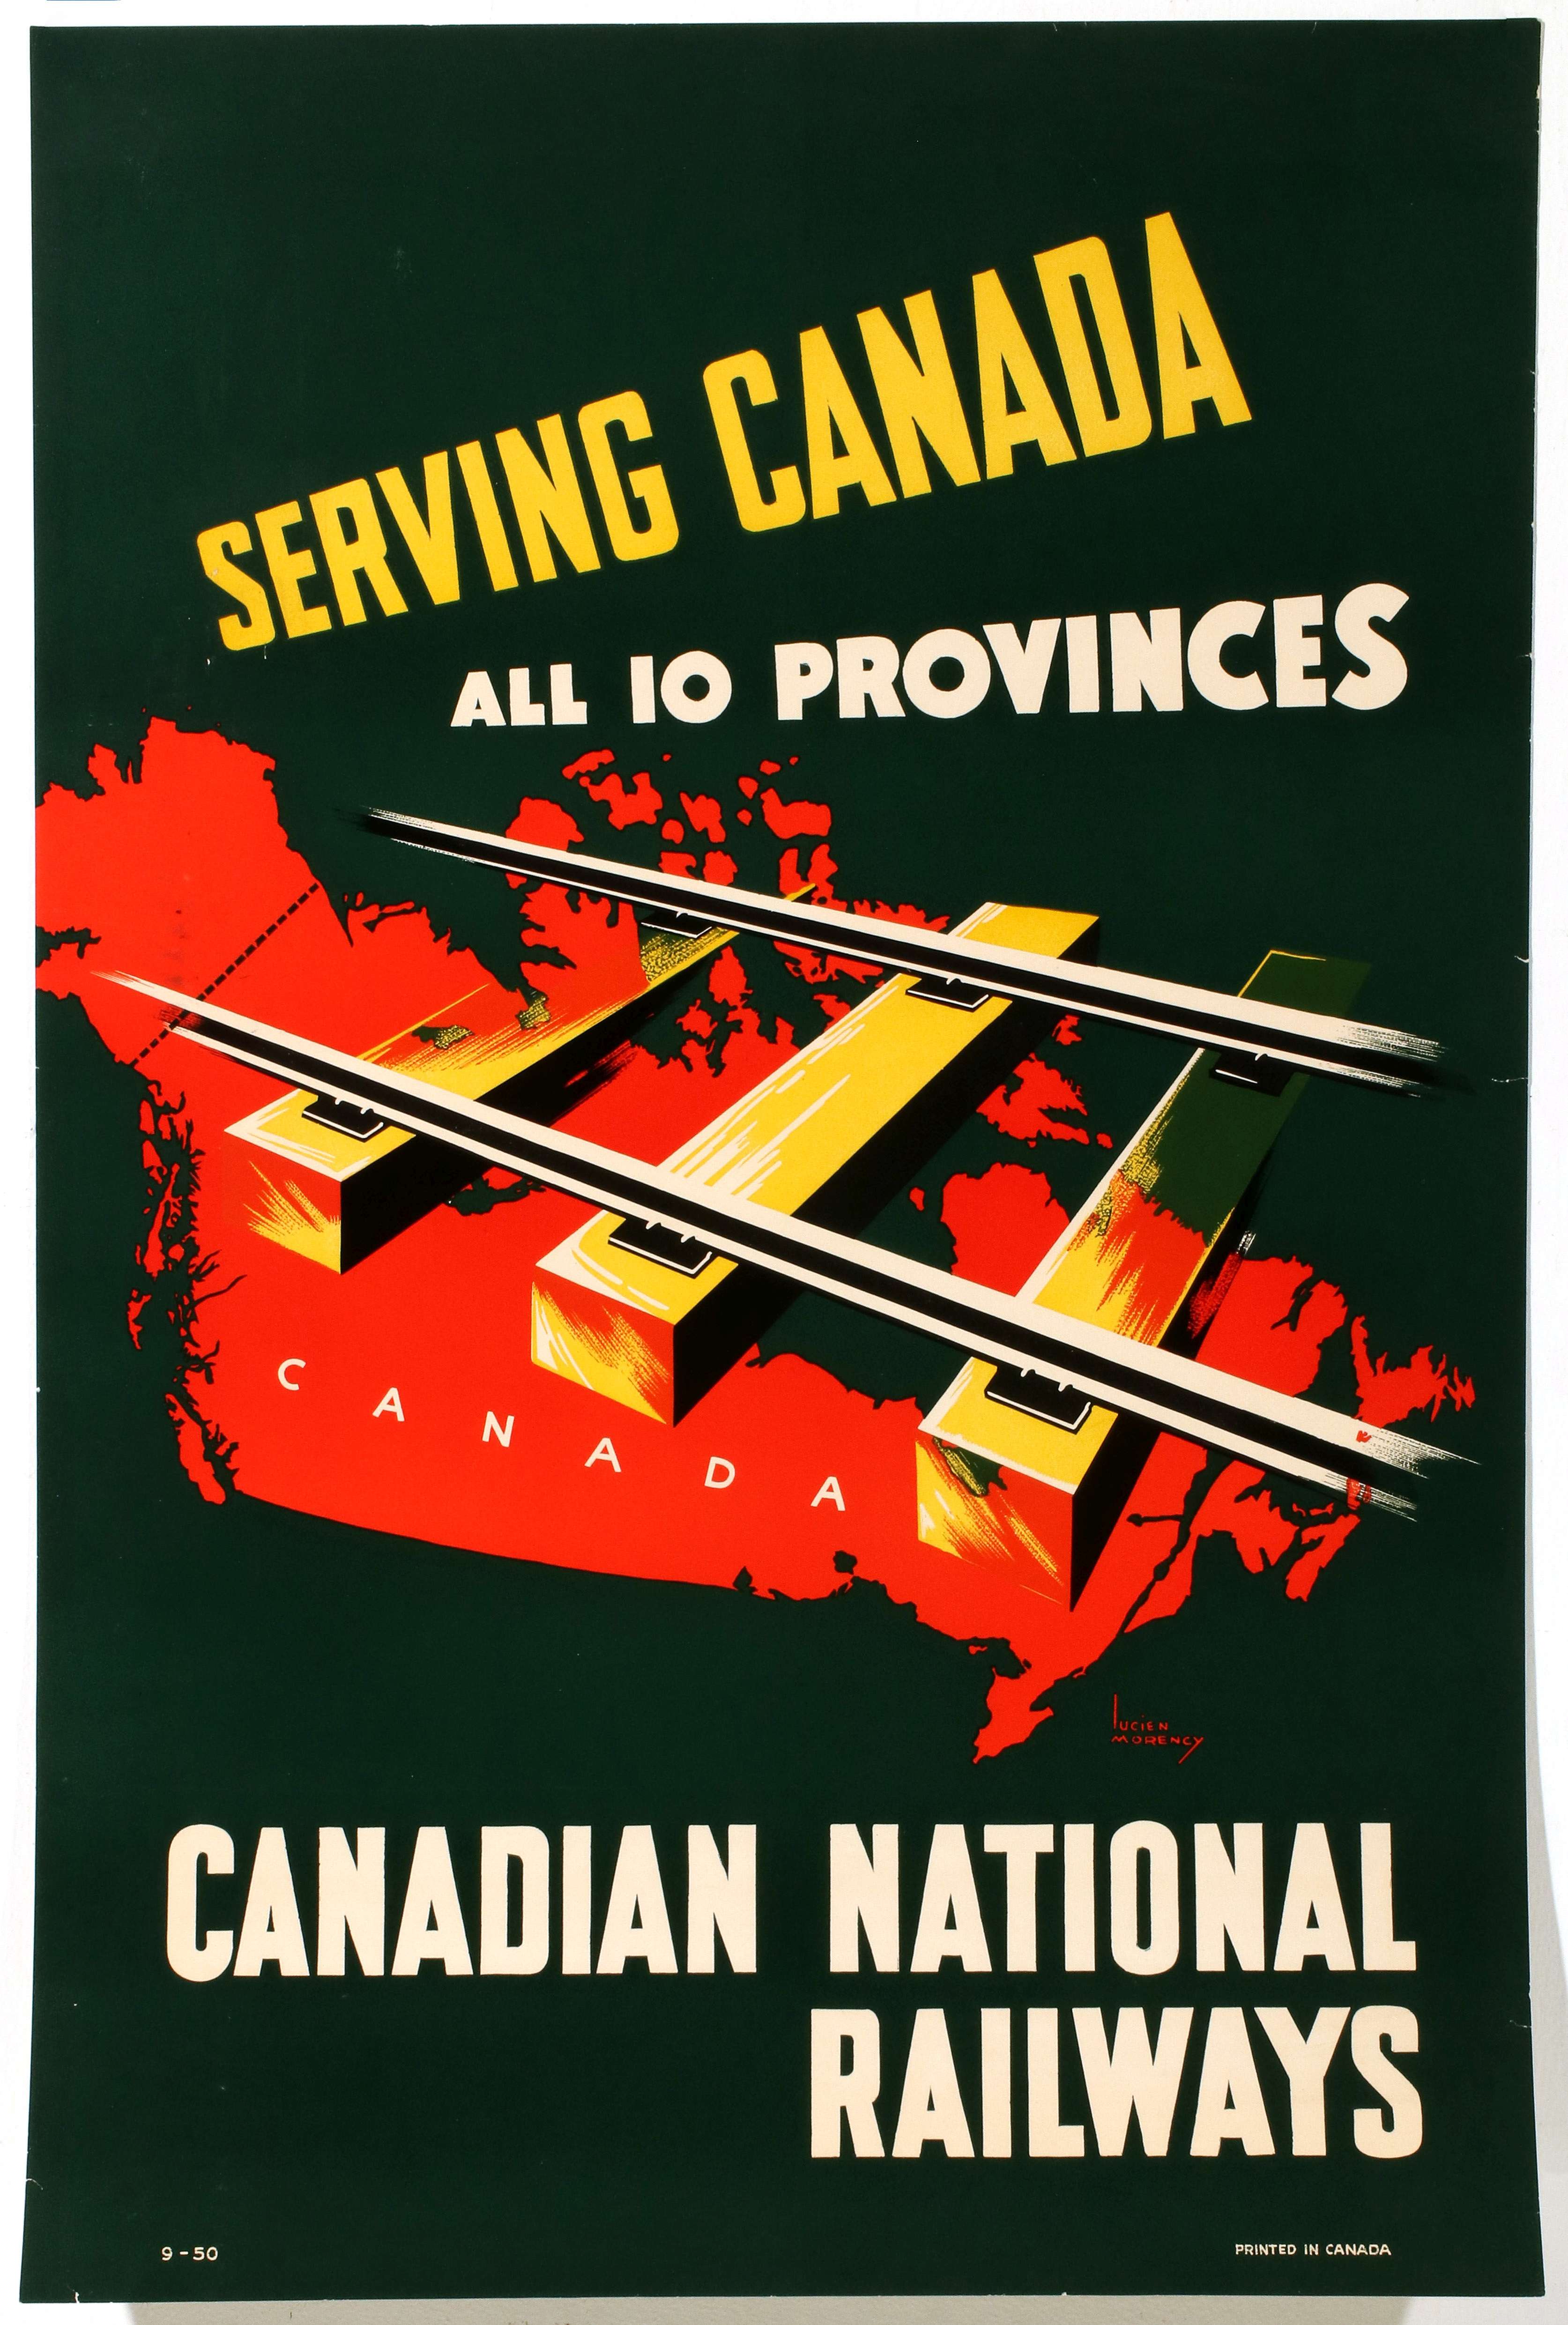 A C.N.R. RAILROAD ADVERTISING POSTER CIRCA 1950